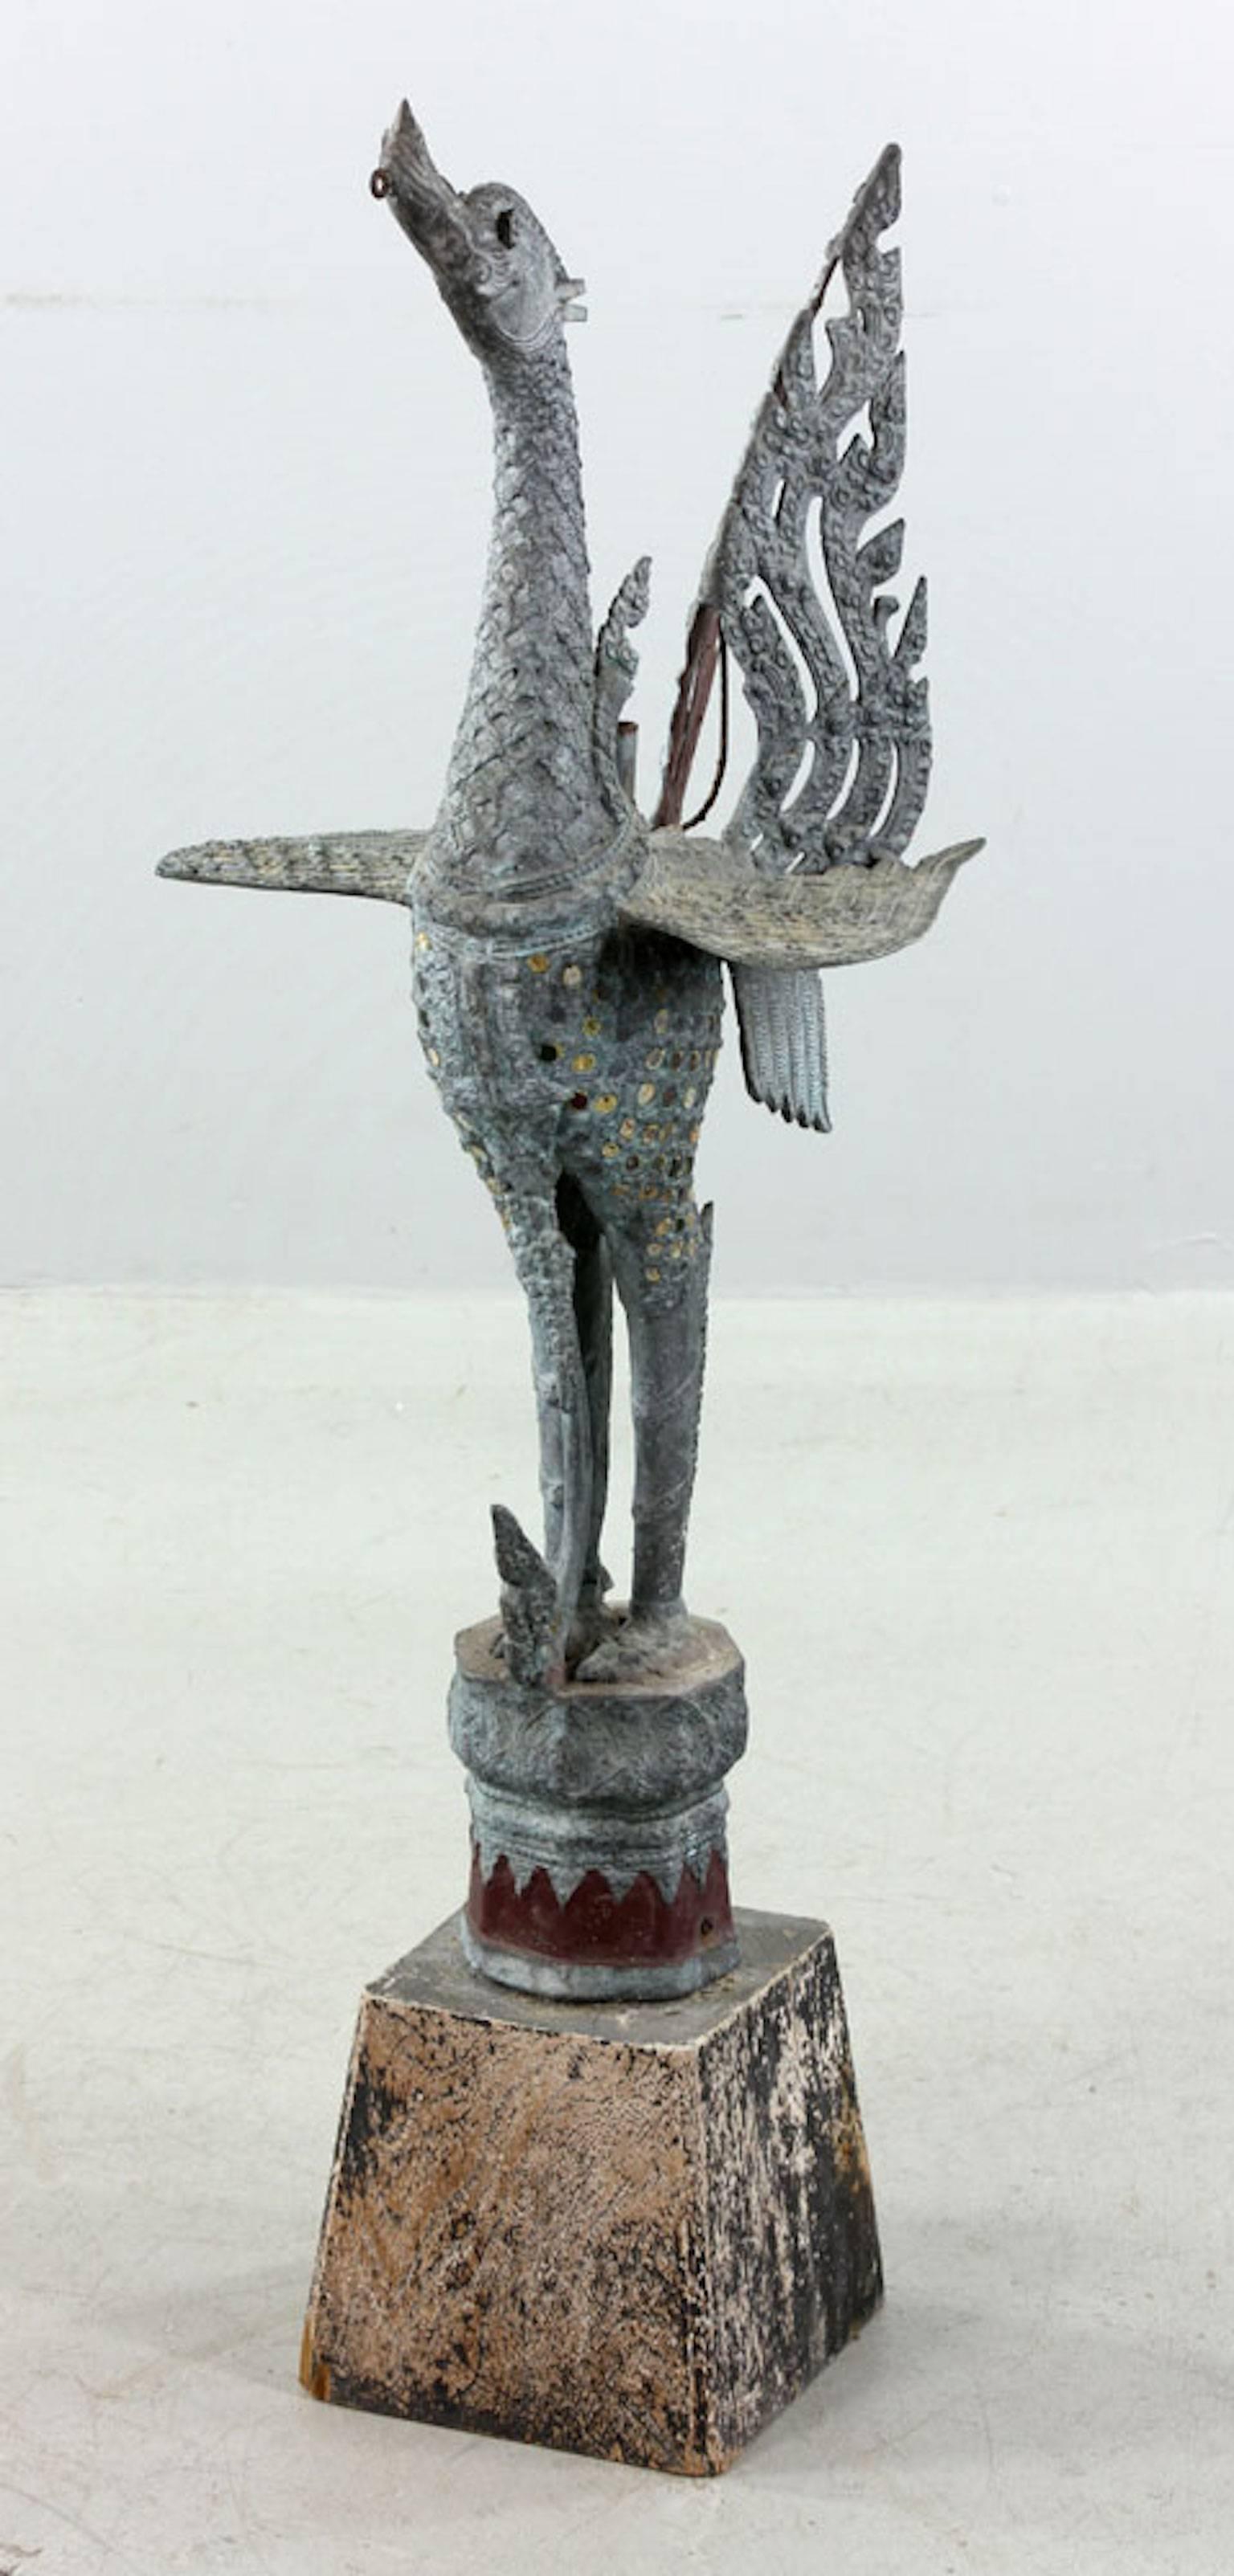 Antique Indonesian bird sculpture, bronze, on wood base. Measures: 42